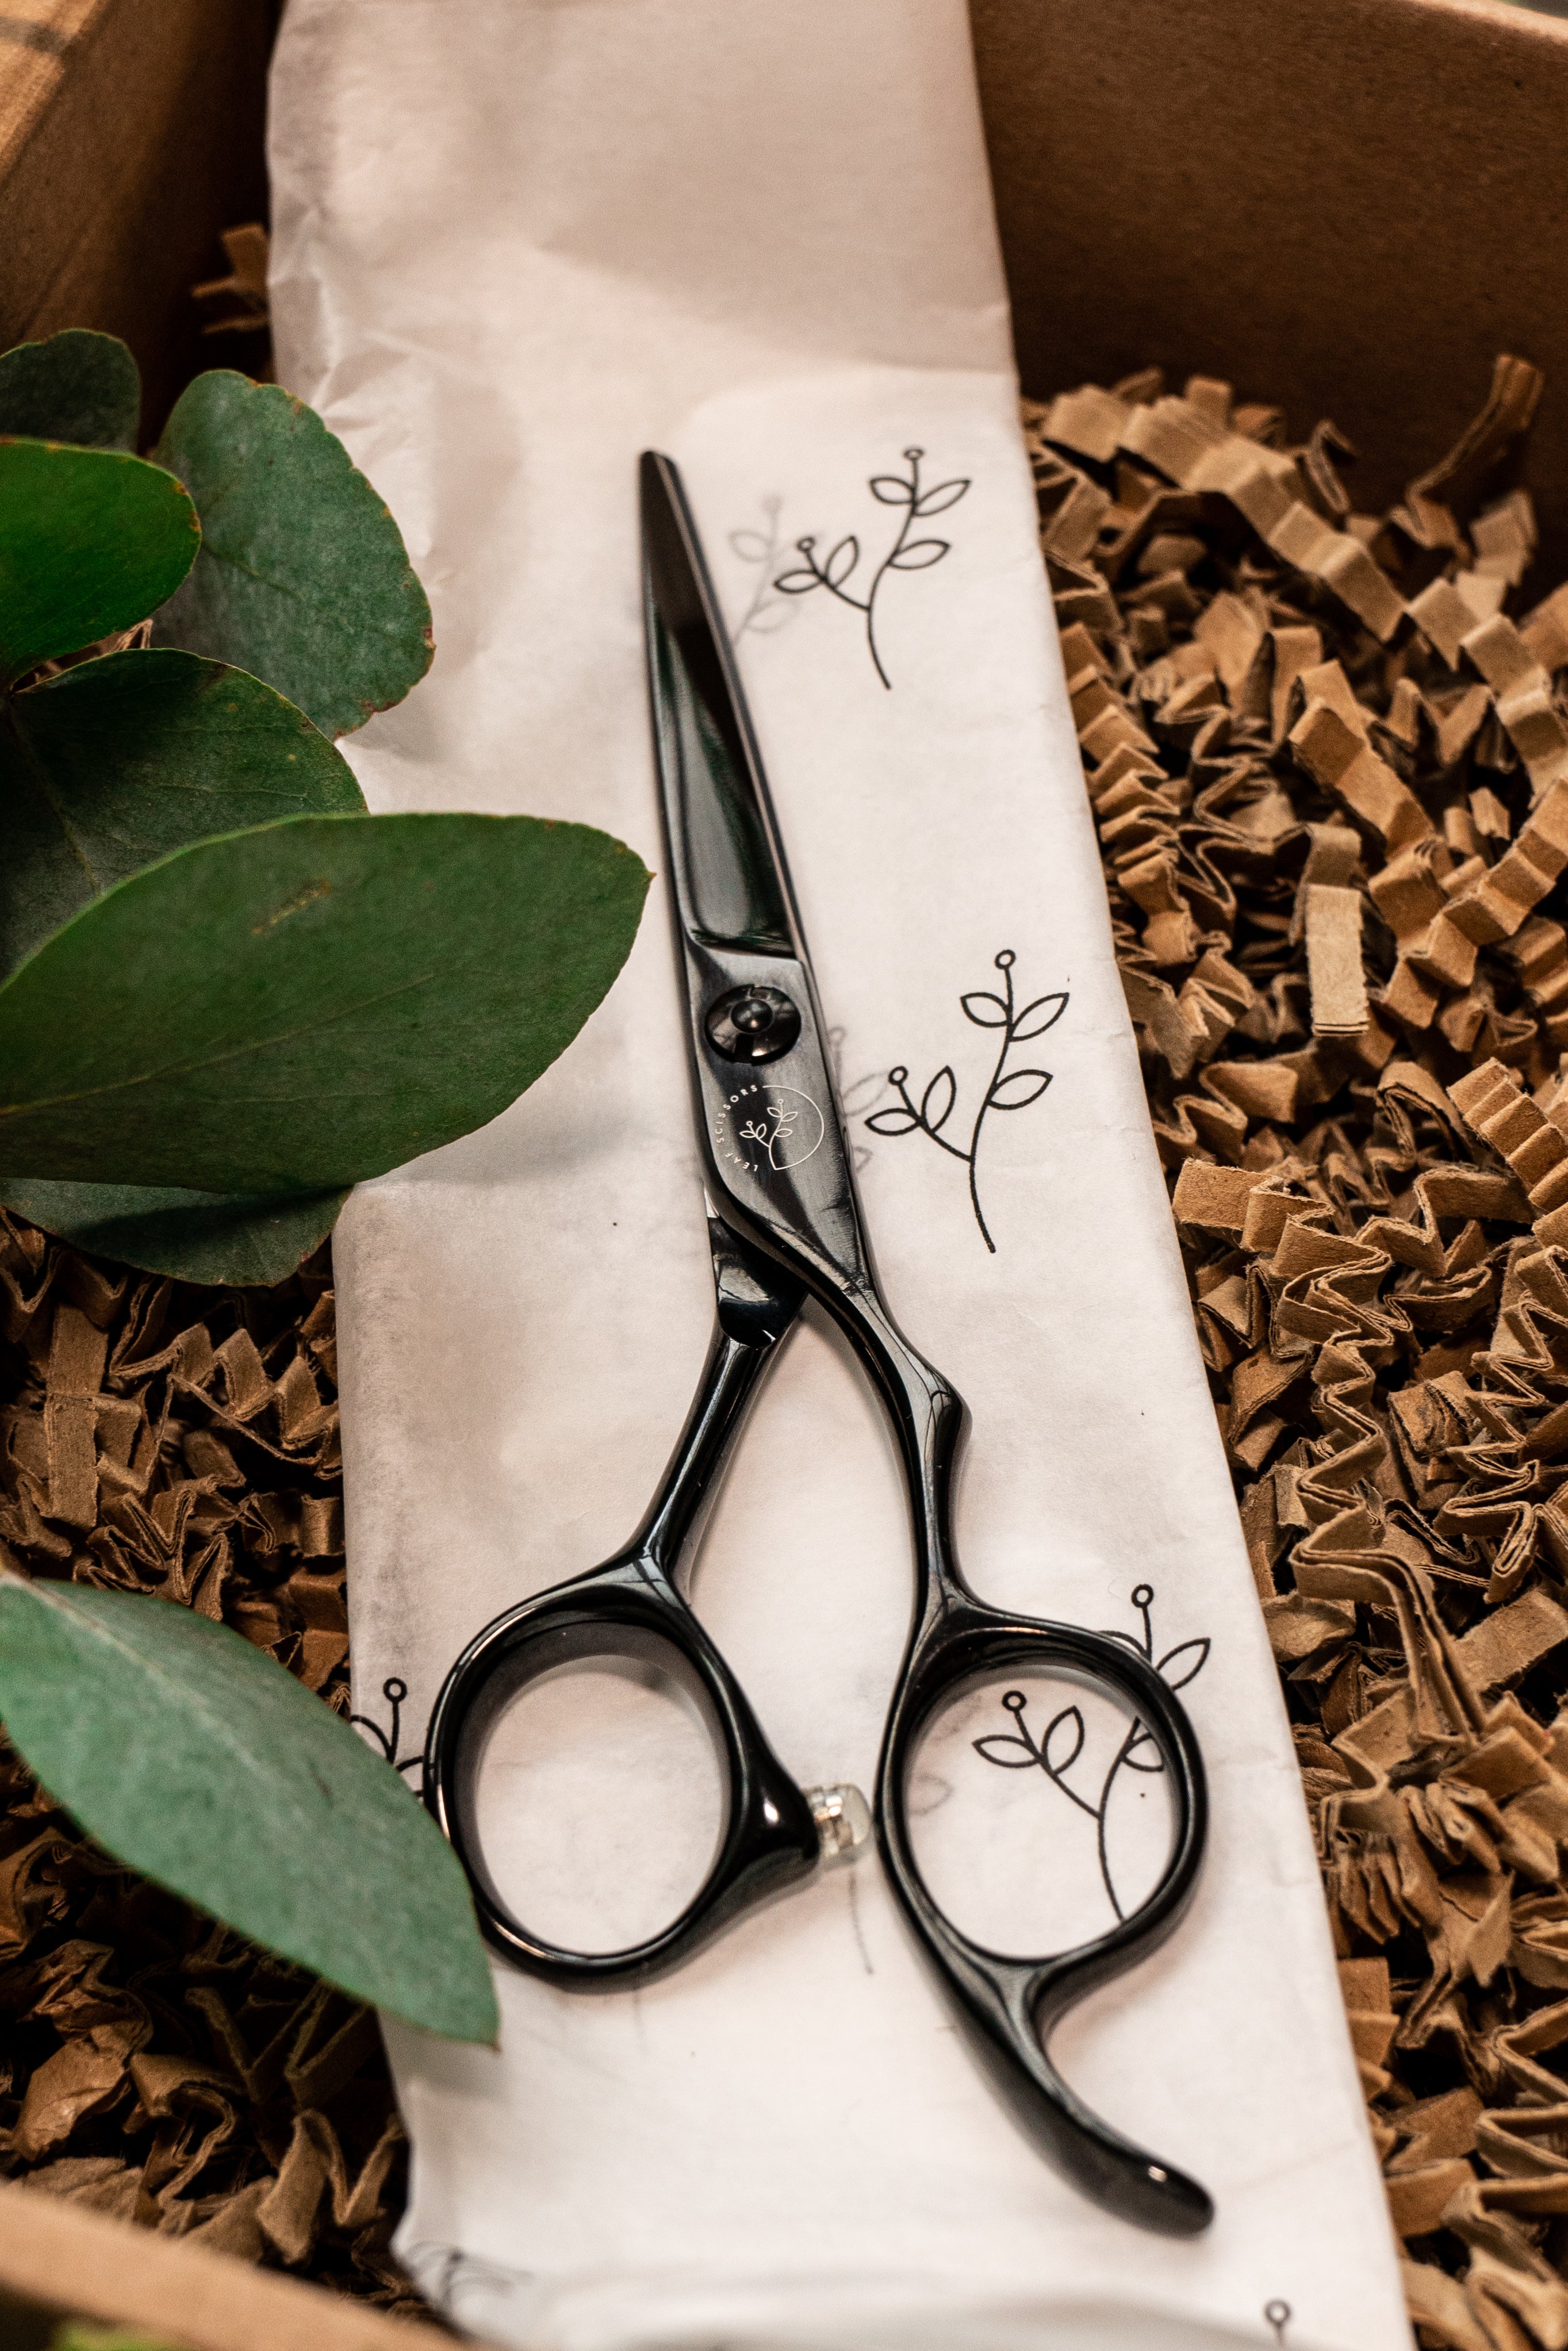 Sharpening Hair Scissors: How to Start a Rewarding Home-Based